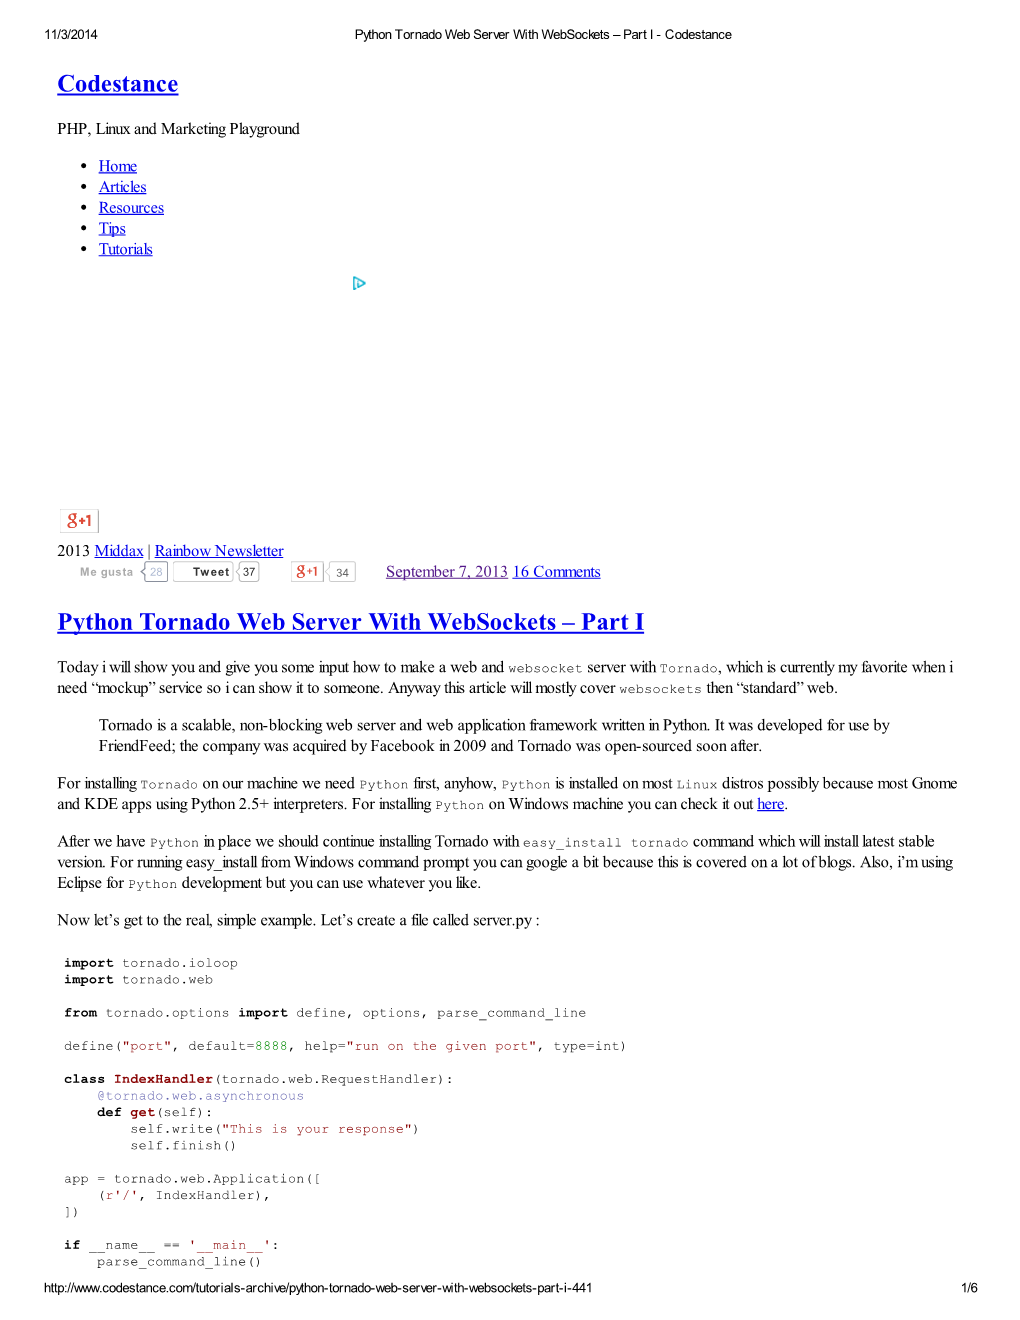 Codestance Python Tornado Web Server with Websockets – Part I